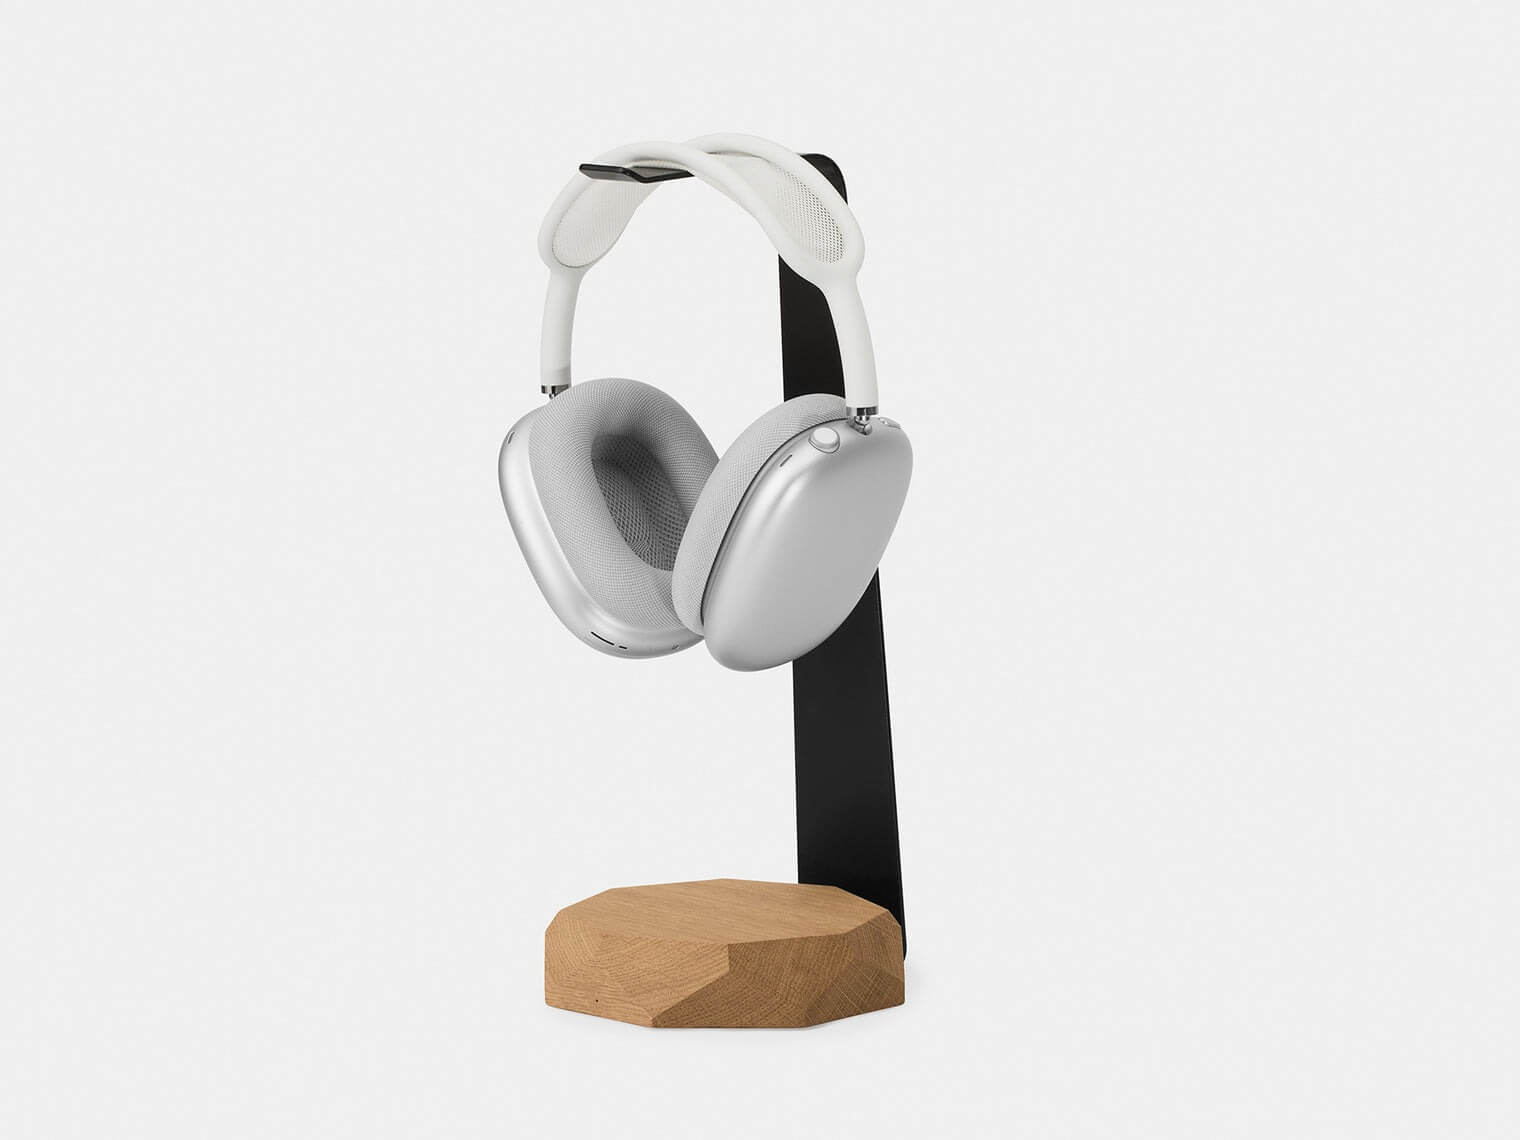 Oakywood 2-in-1 headphone stand